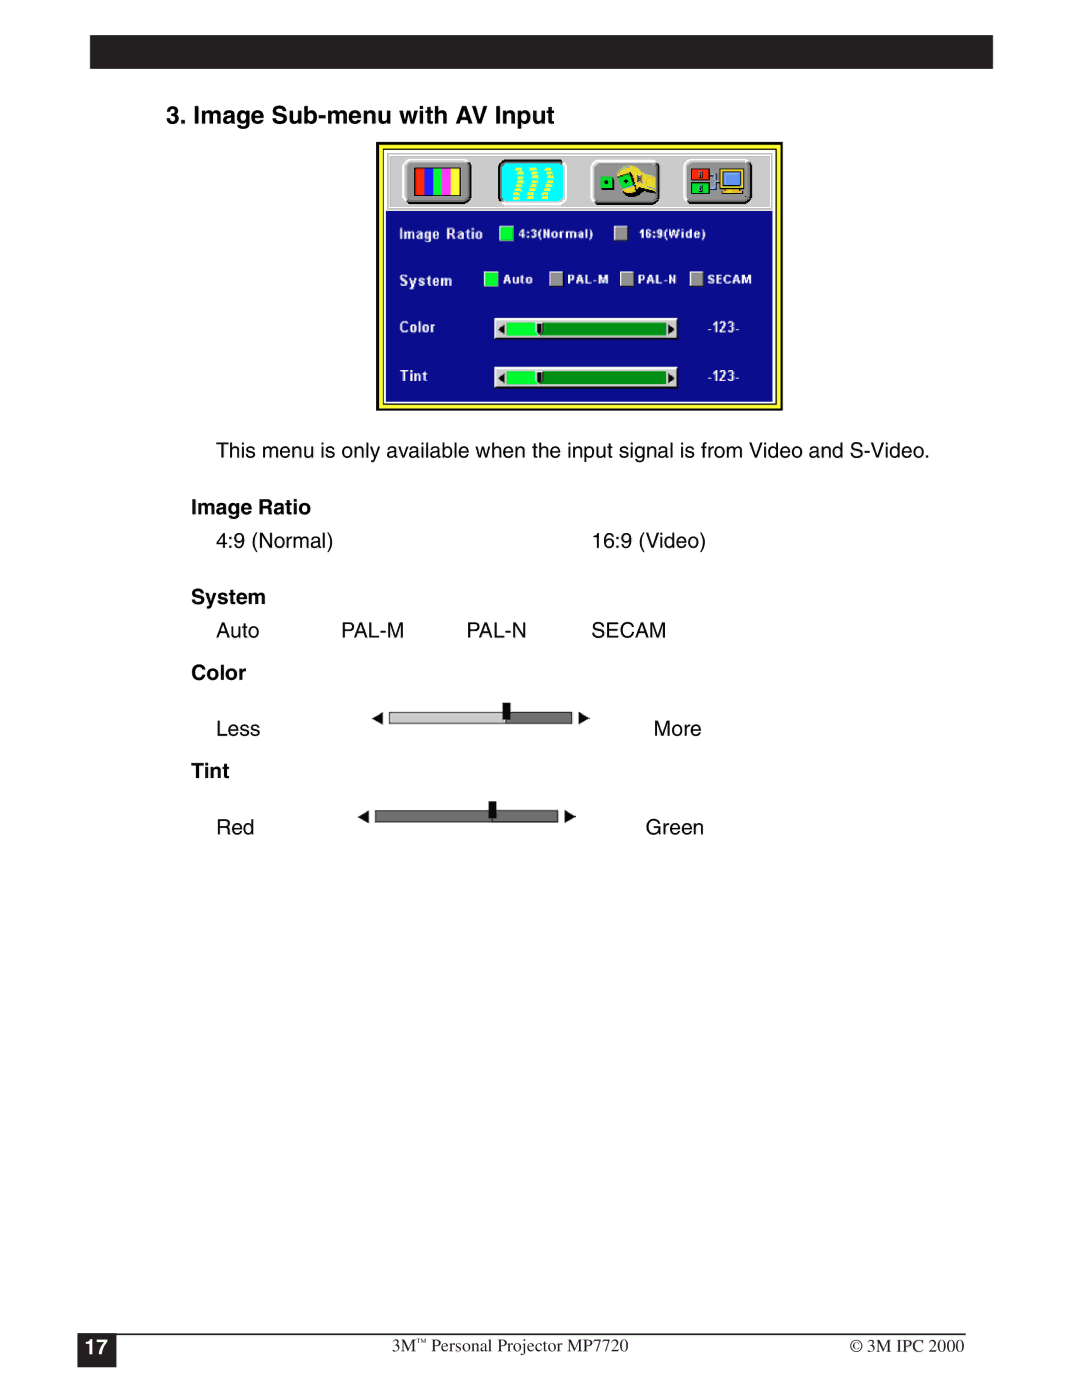 3M MP7720 manual Image Sub-menu with AV Input, Image Ratio, System, Color, Tint 